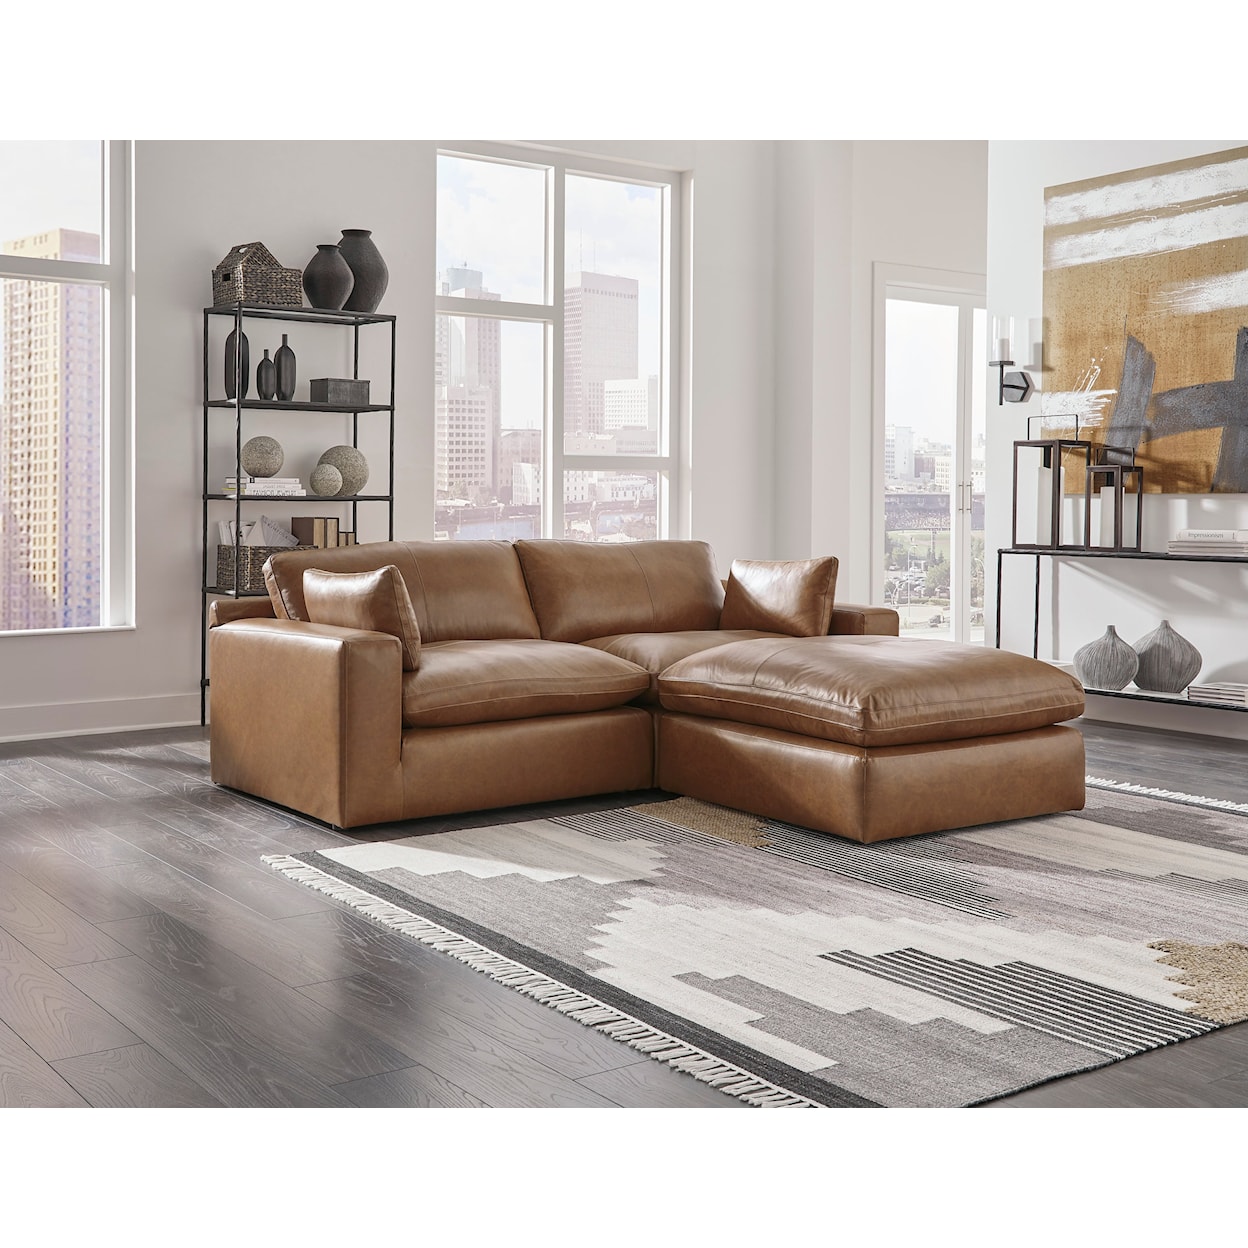 Ashley Furniture Signature Design Emilia Leather Match Modular Sectional with Ottoman